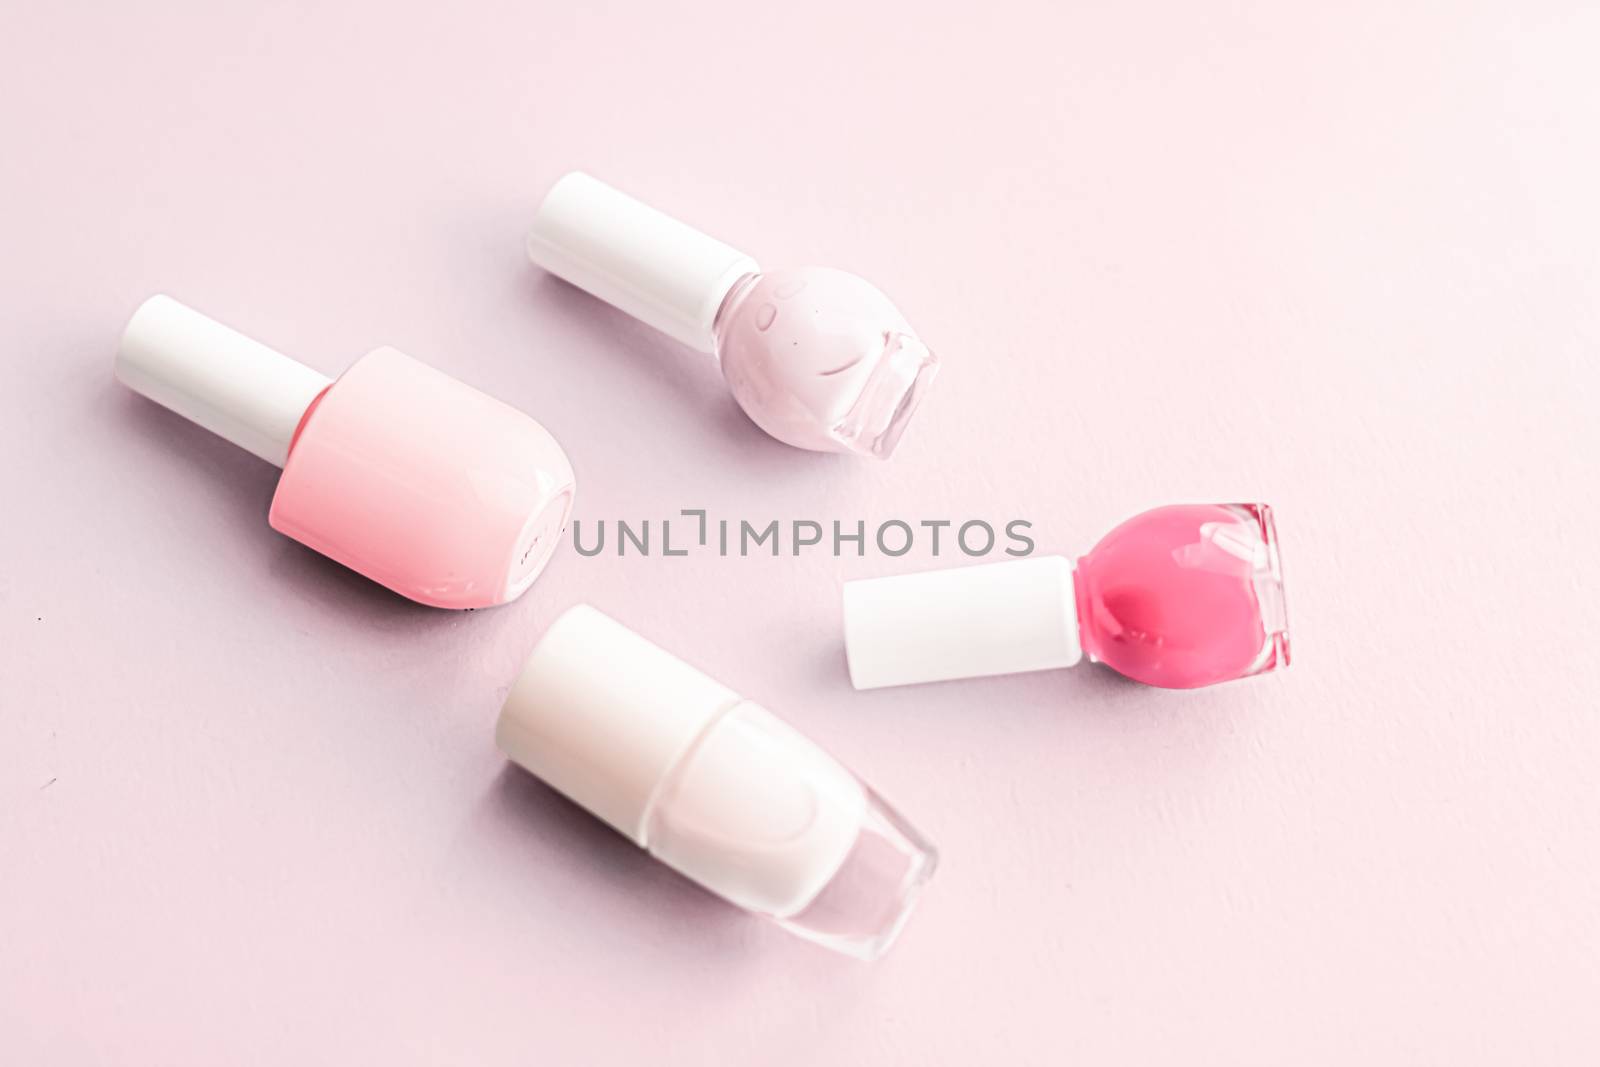 Nail polish bottles on blush pink background, beauty brand by Anneleven